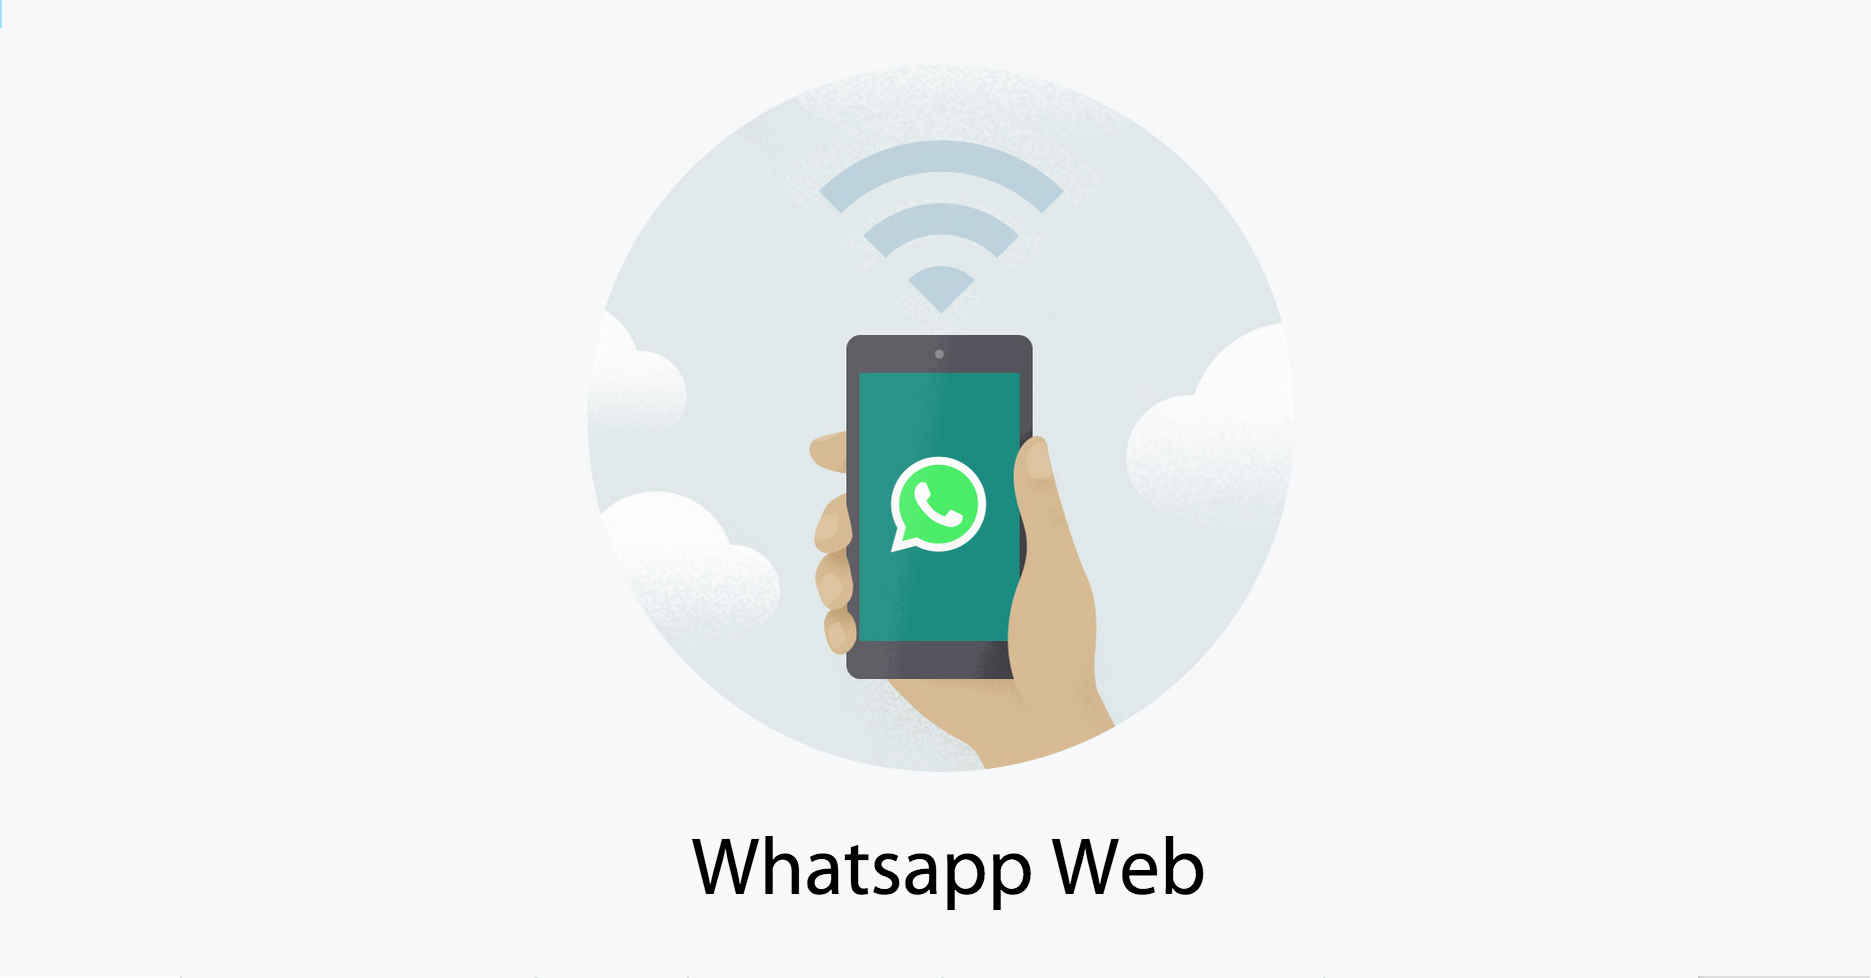 Whatsapp users. Ватсап веб. Ватсап веб лого. Мобильный WHATSAPP. WHATSAPP мессенджер.